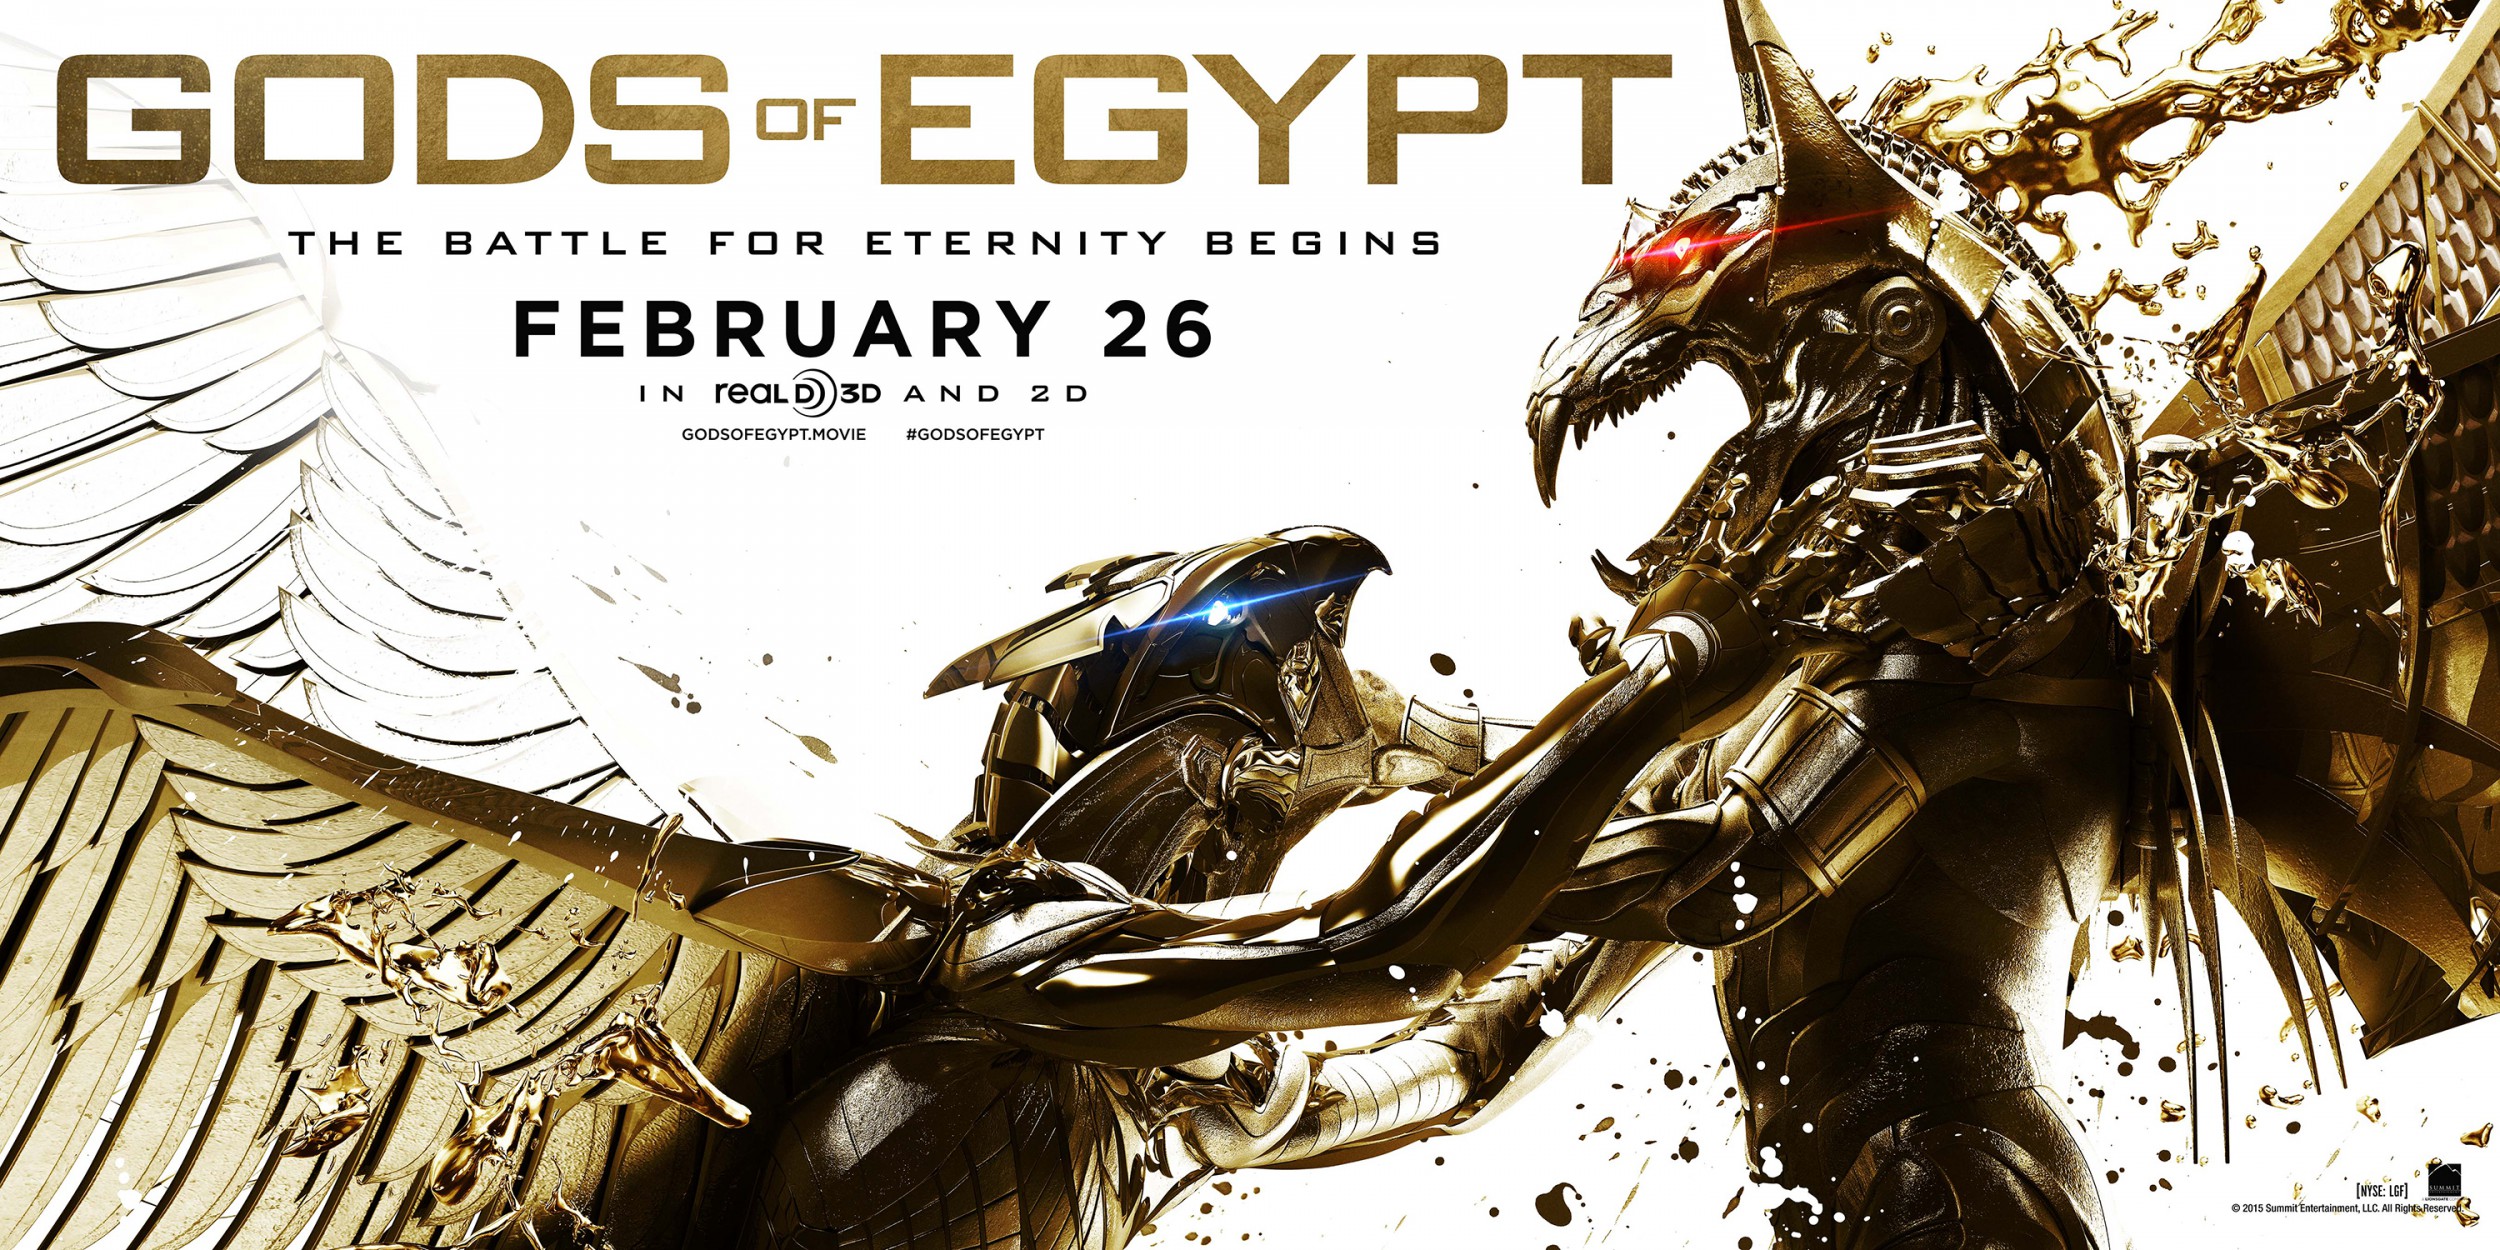 Mega Sized Movie Poster Image for Gods of Egypt (#10 of 27)